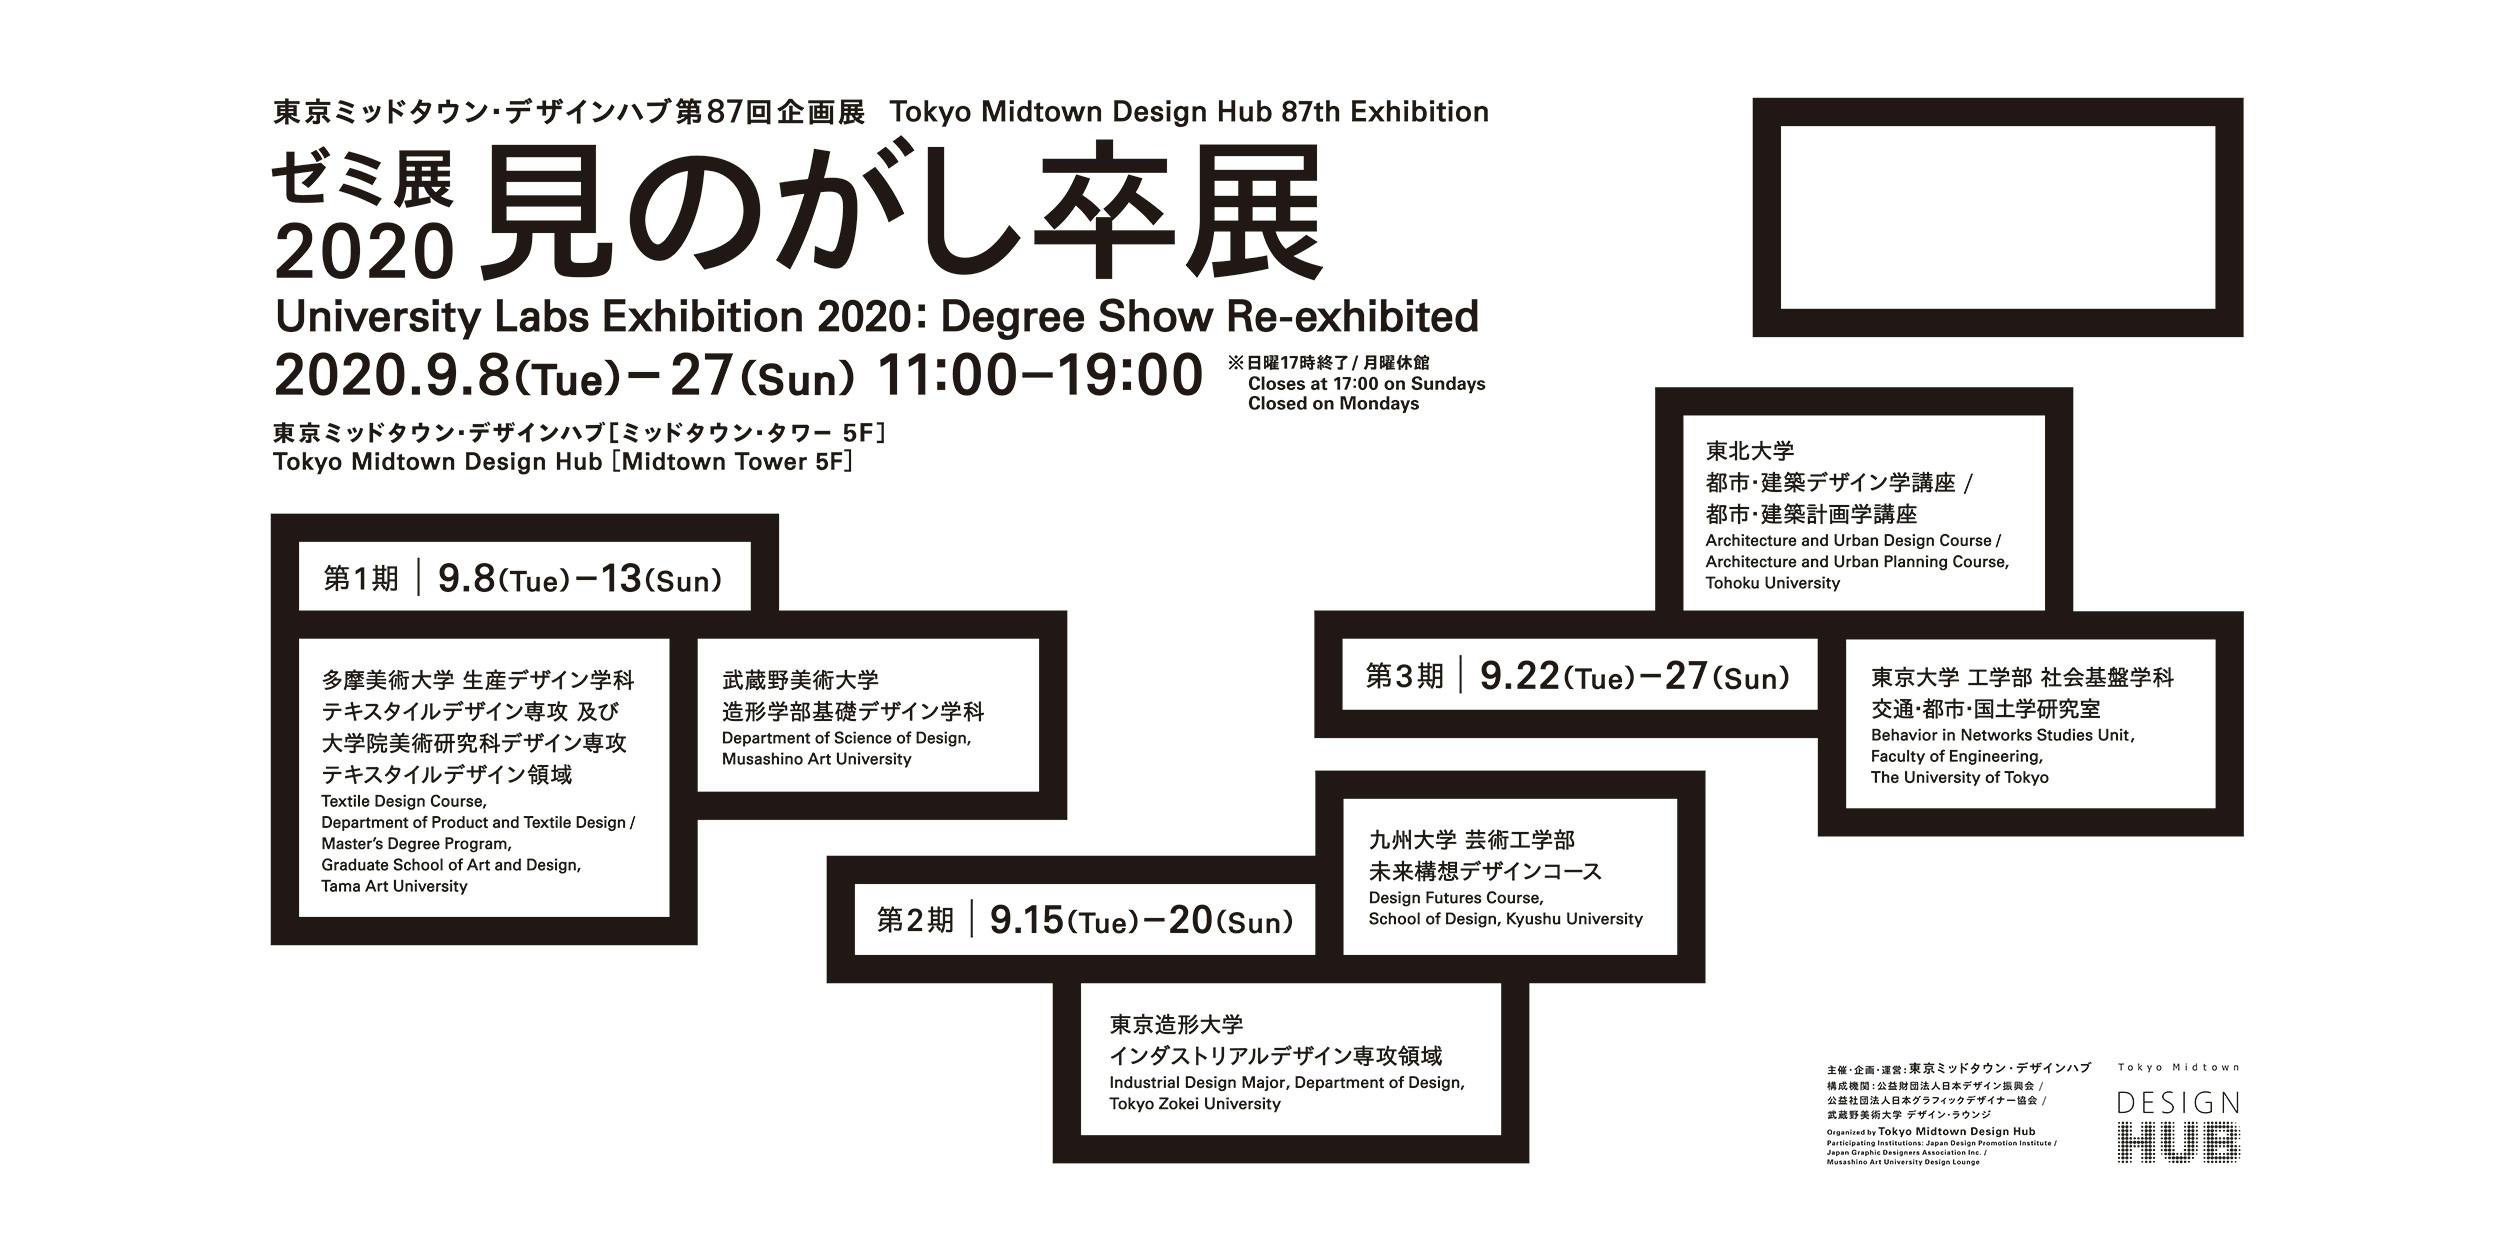 University Labs Exhibition 2020: Degree Show Re-exhibited